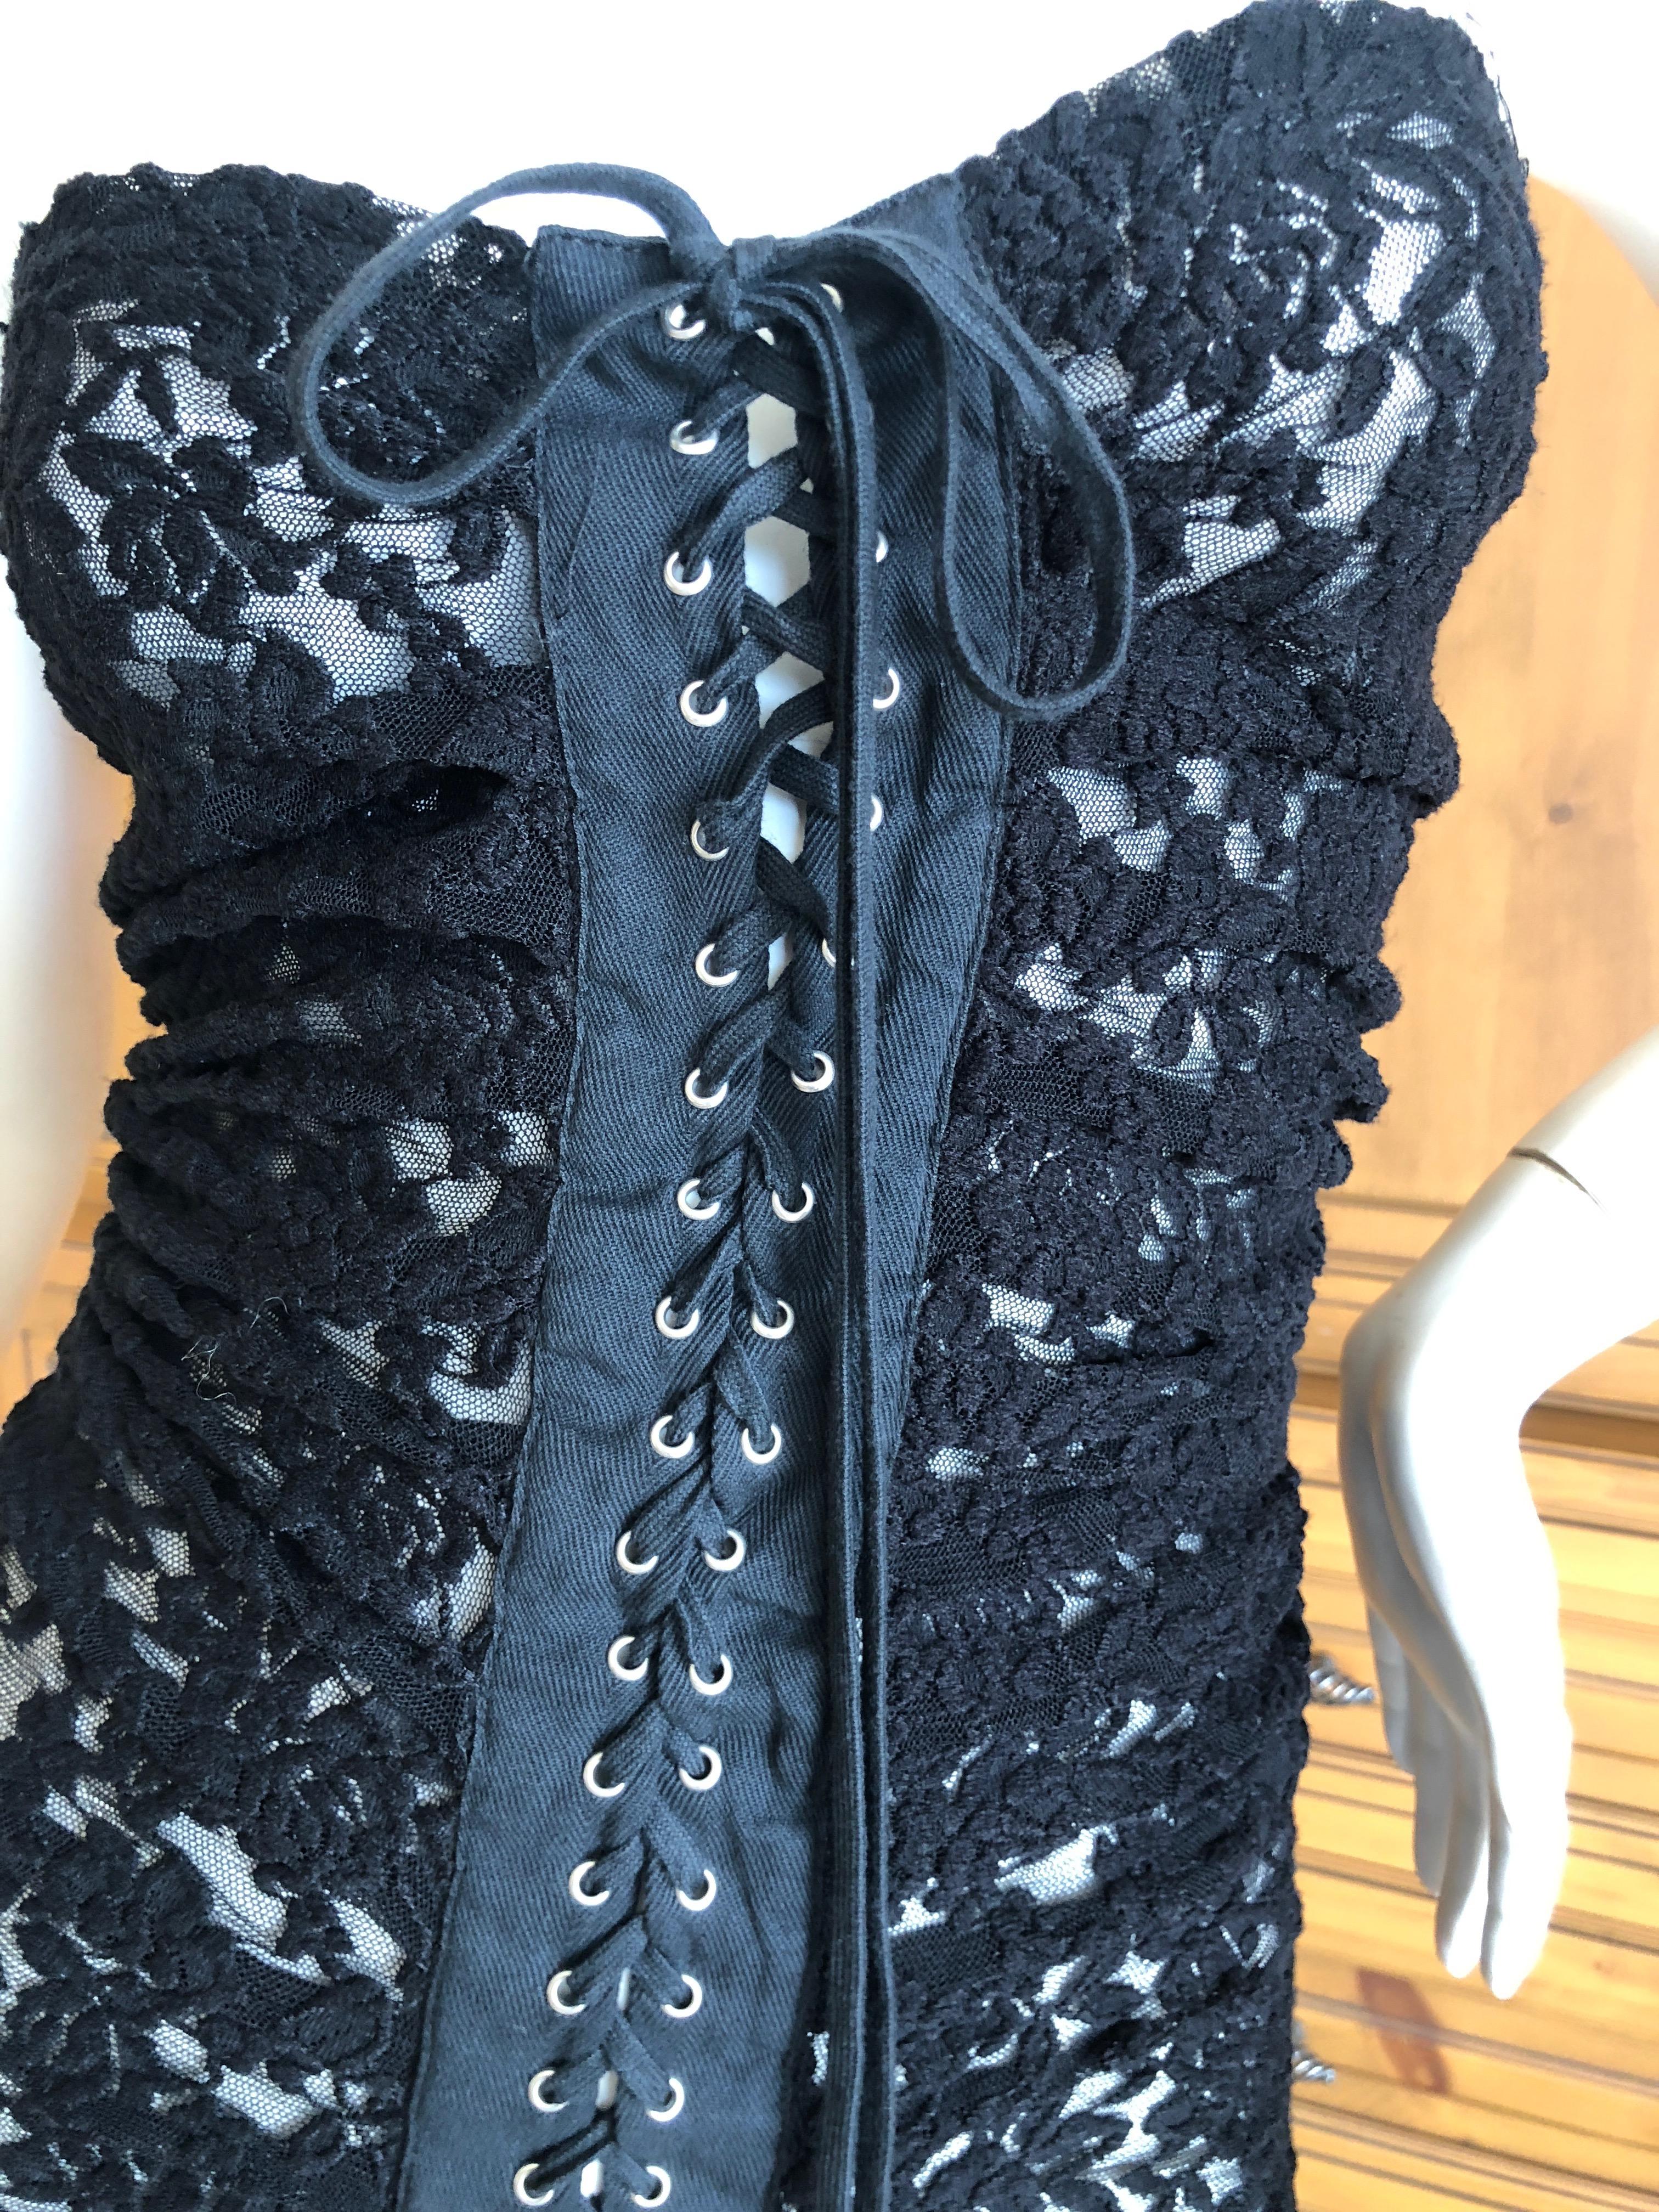 D&G Dolce & Gabbana Sheer Black Lace Strapless Cocktail Dress w Lace Up Details 1